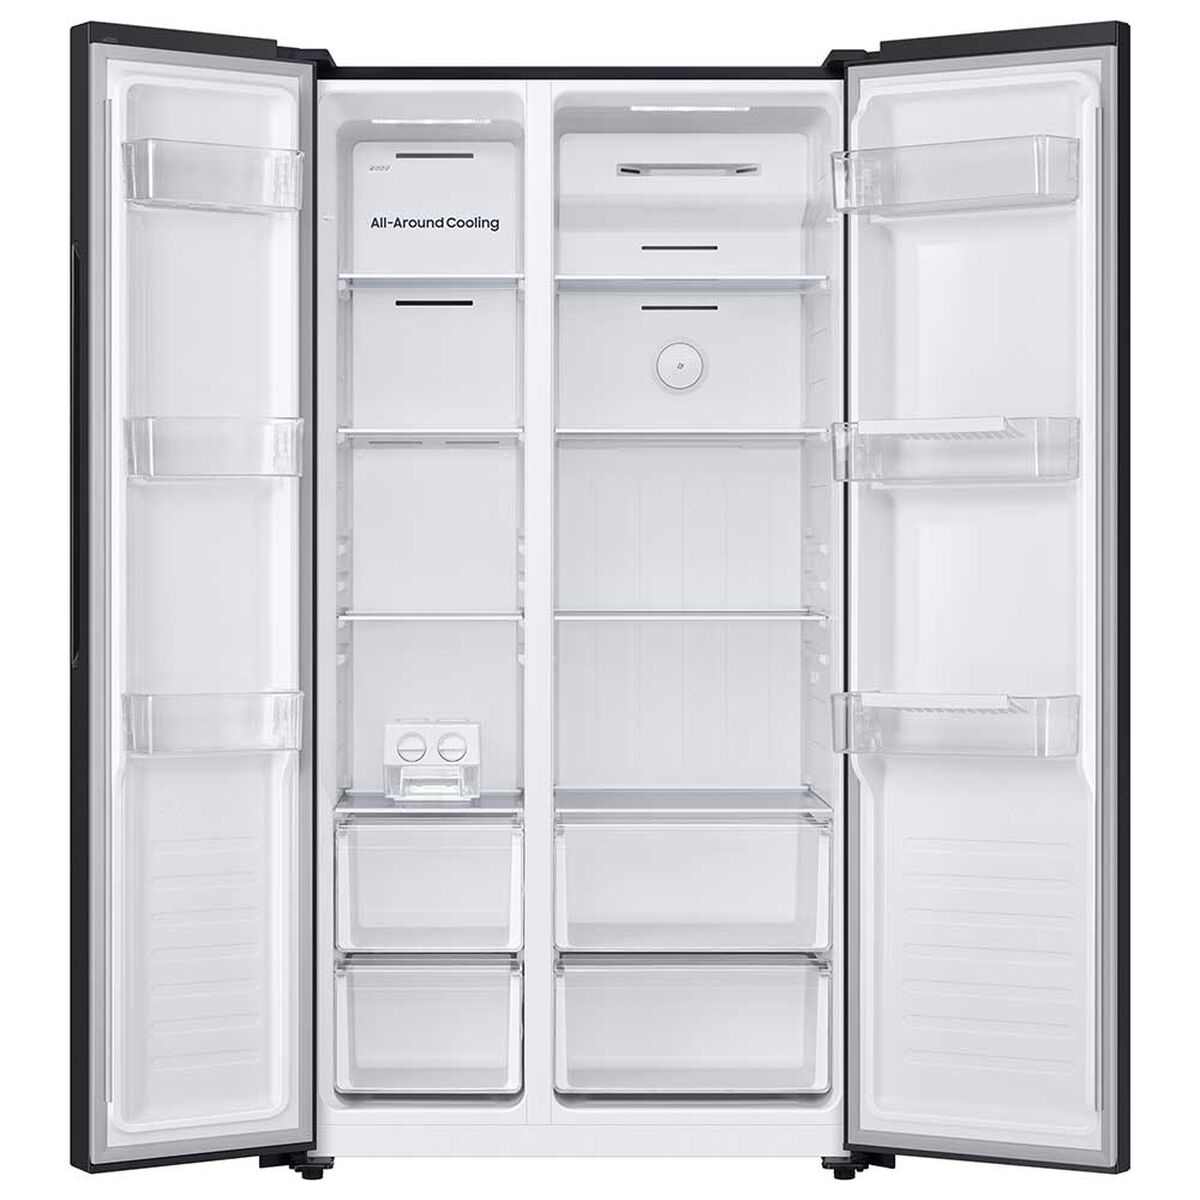 Refrigerador Side by Side Samsung RS52B3000B4ZS 490 lts.